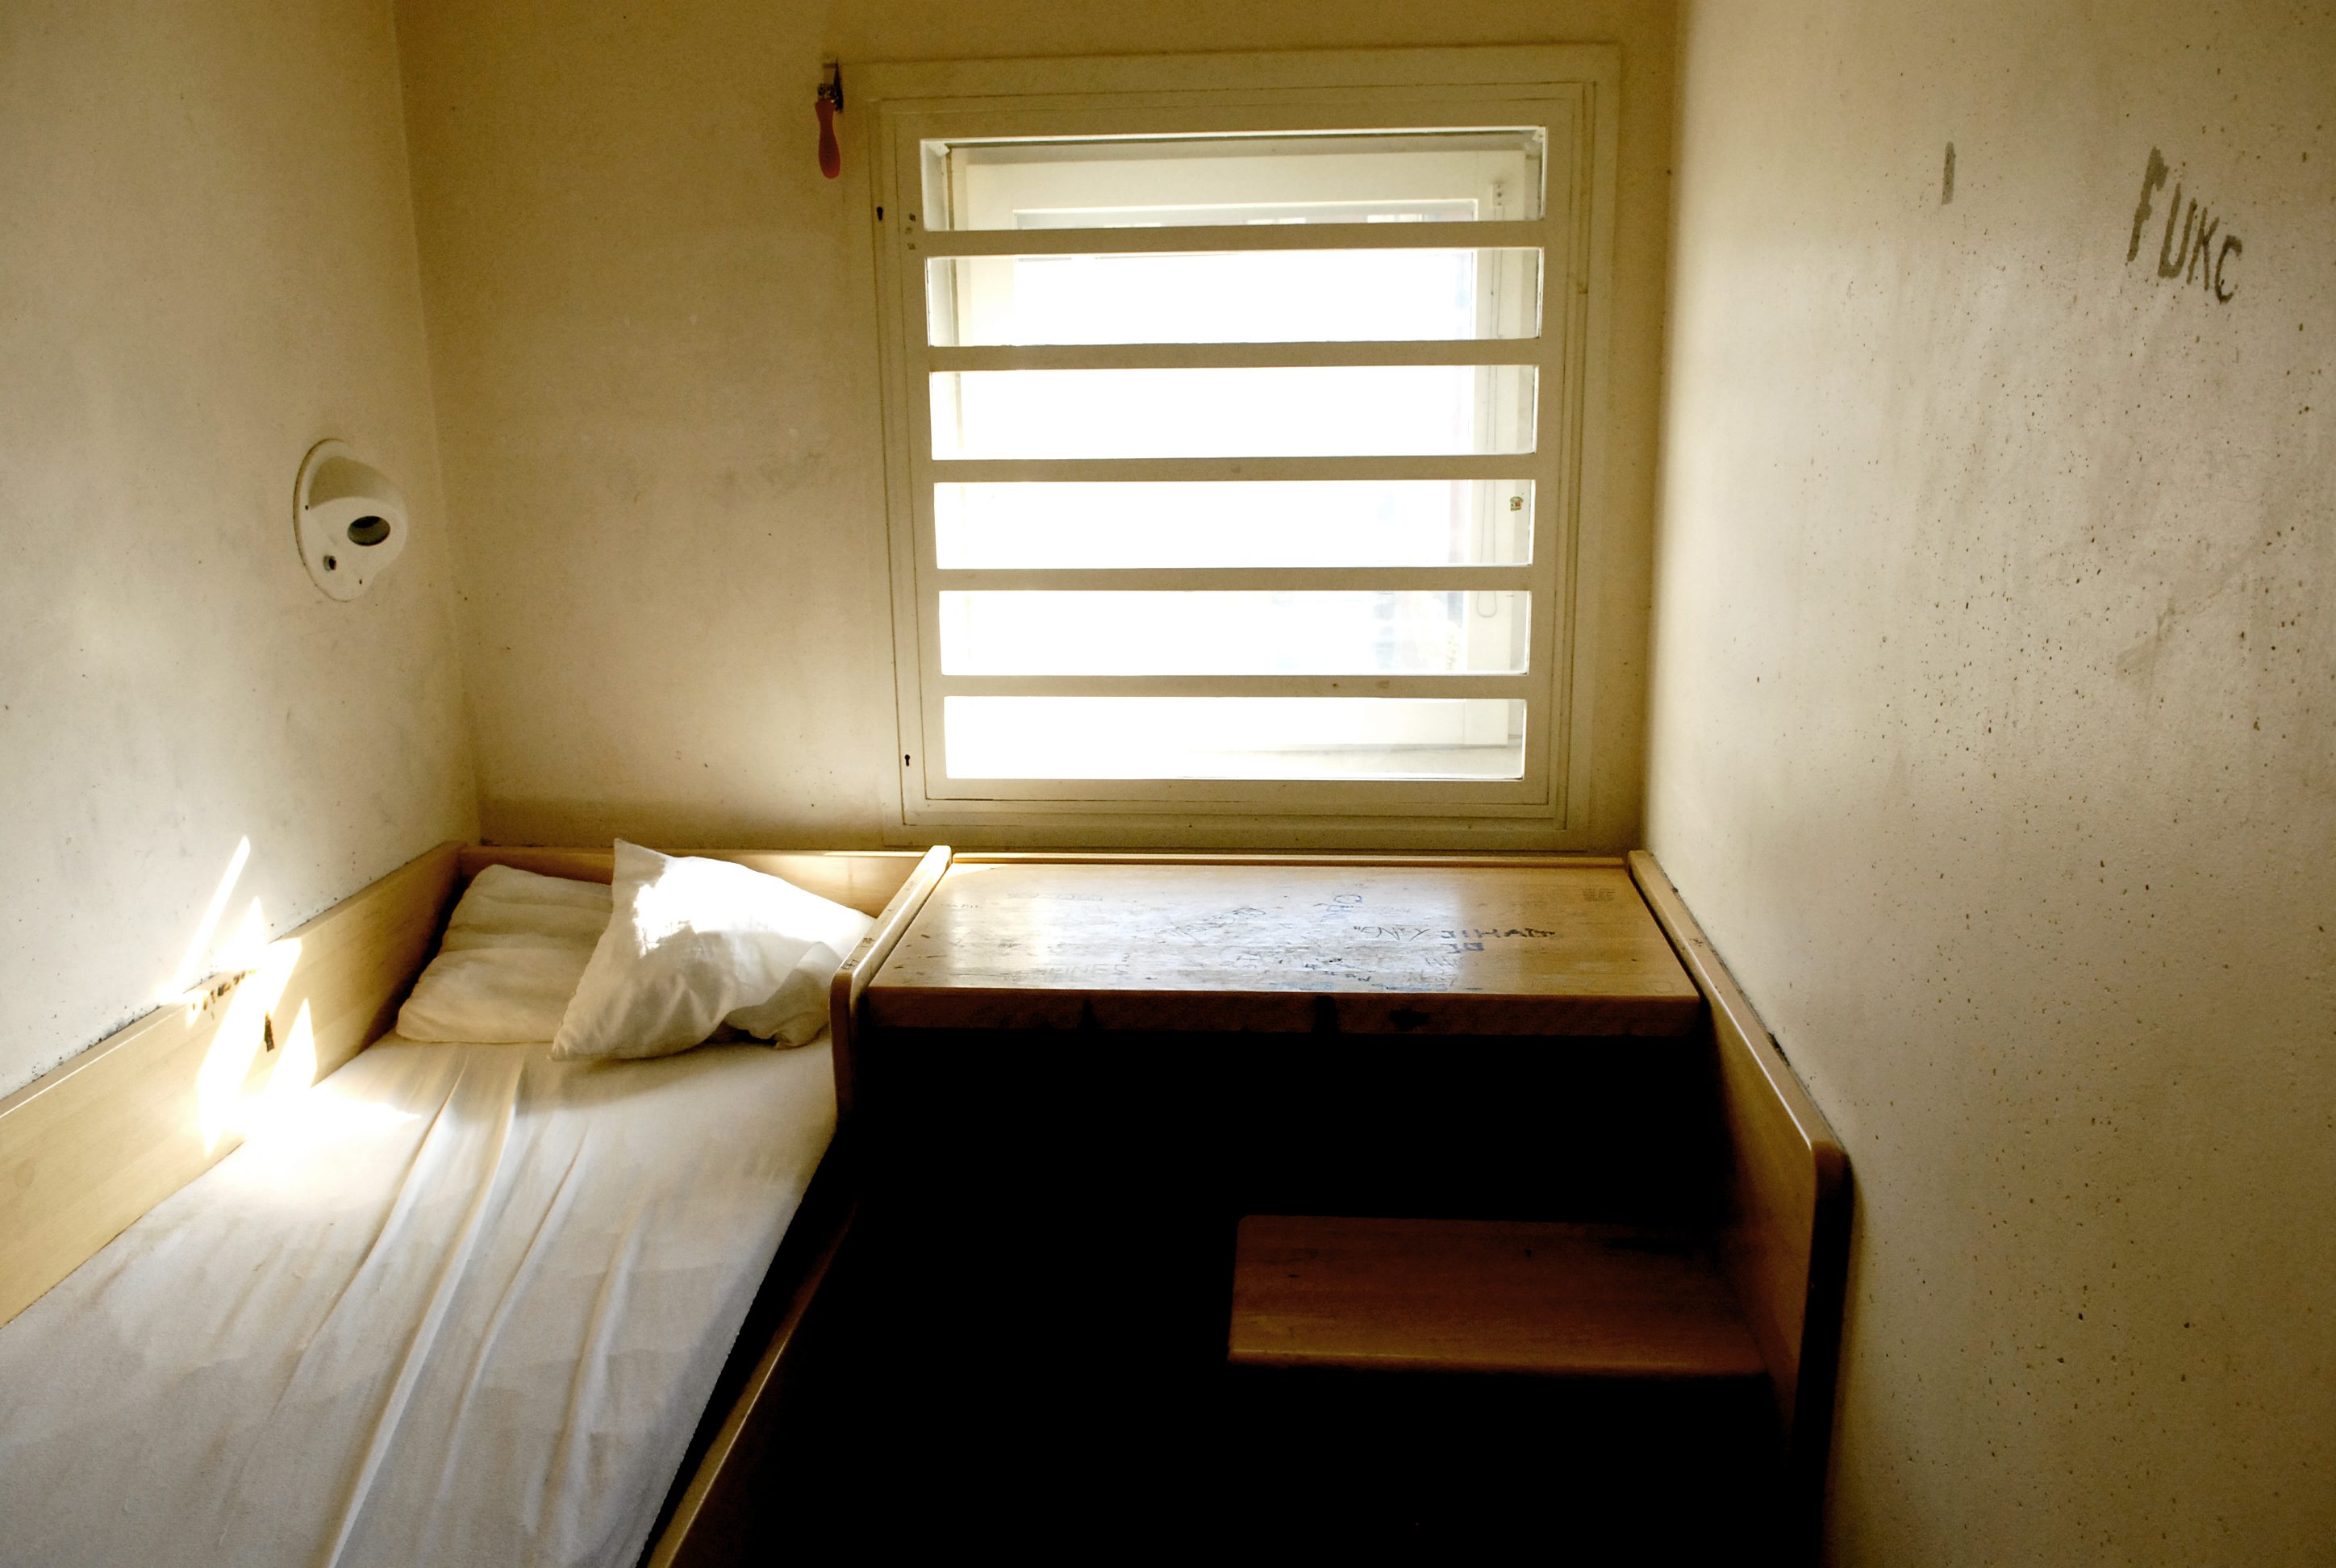 Cell, San Diego, Häkte, Polisen, USA